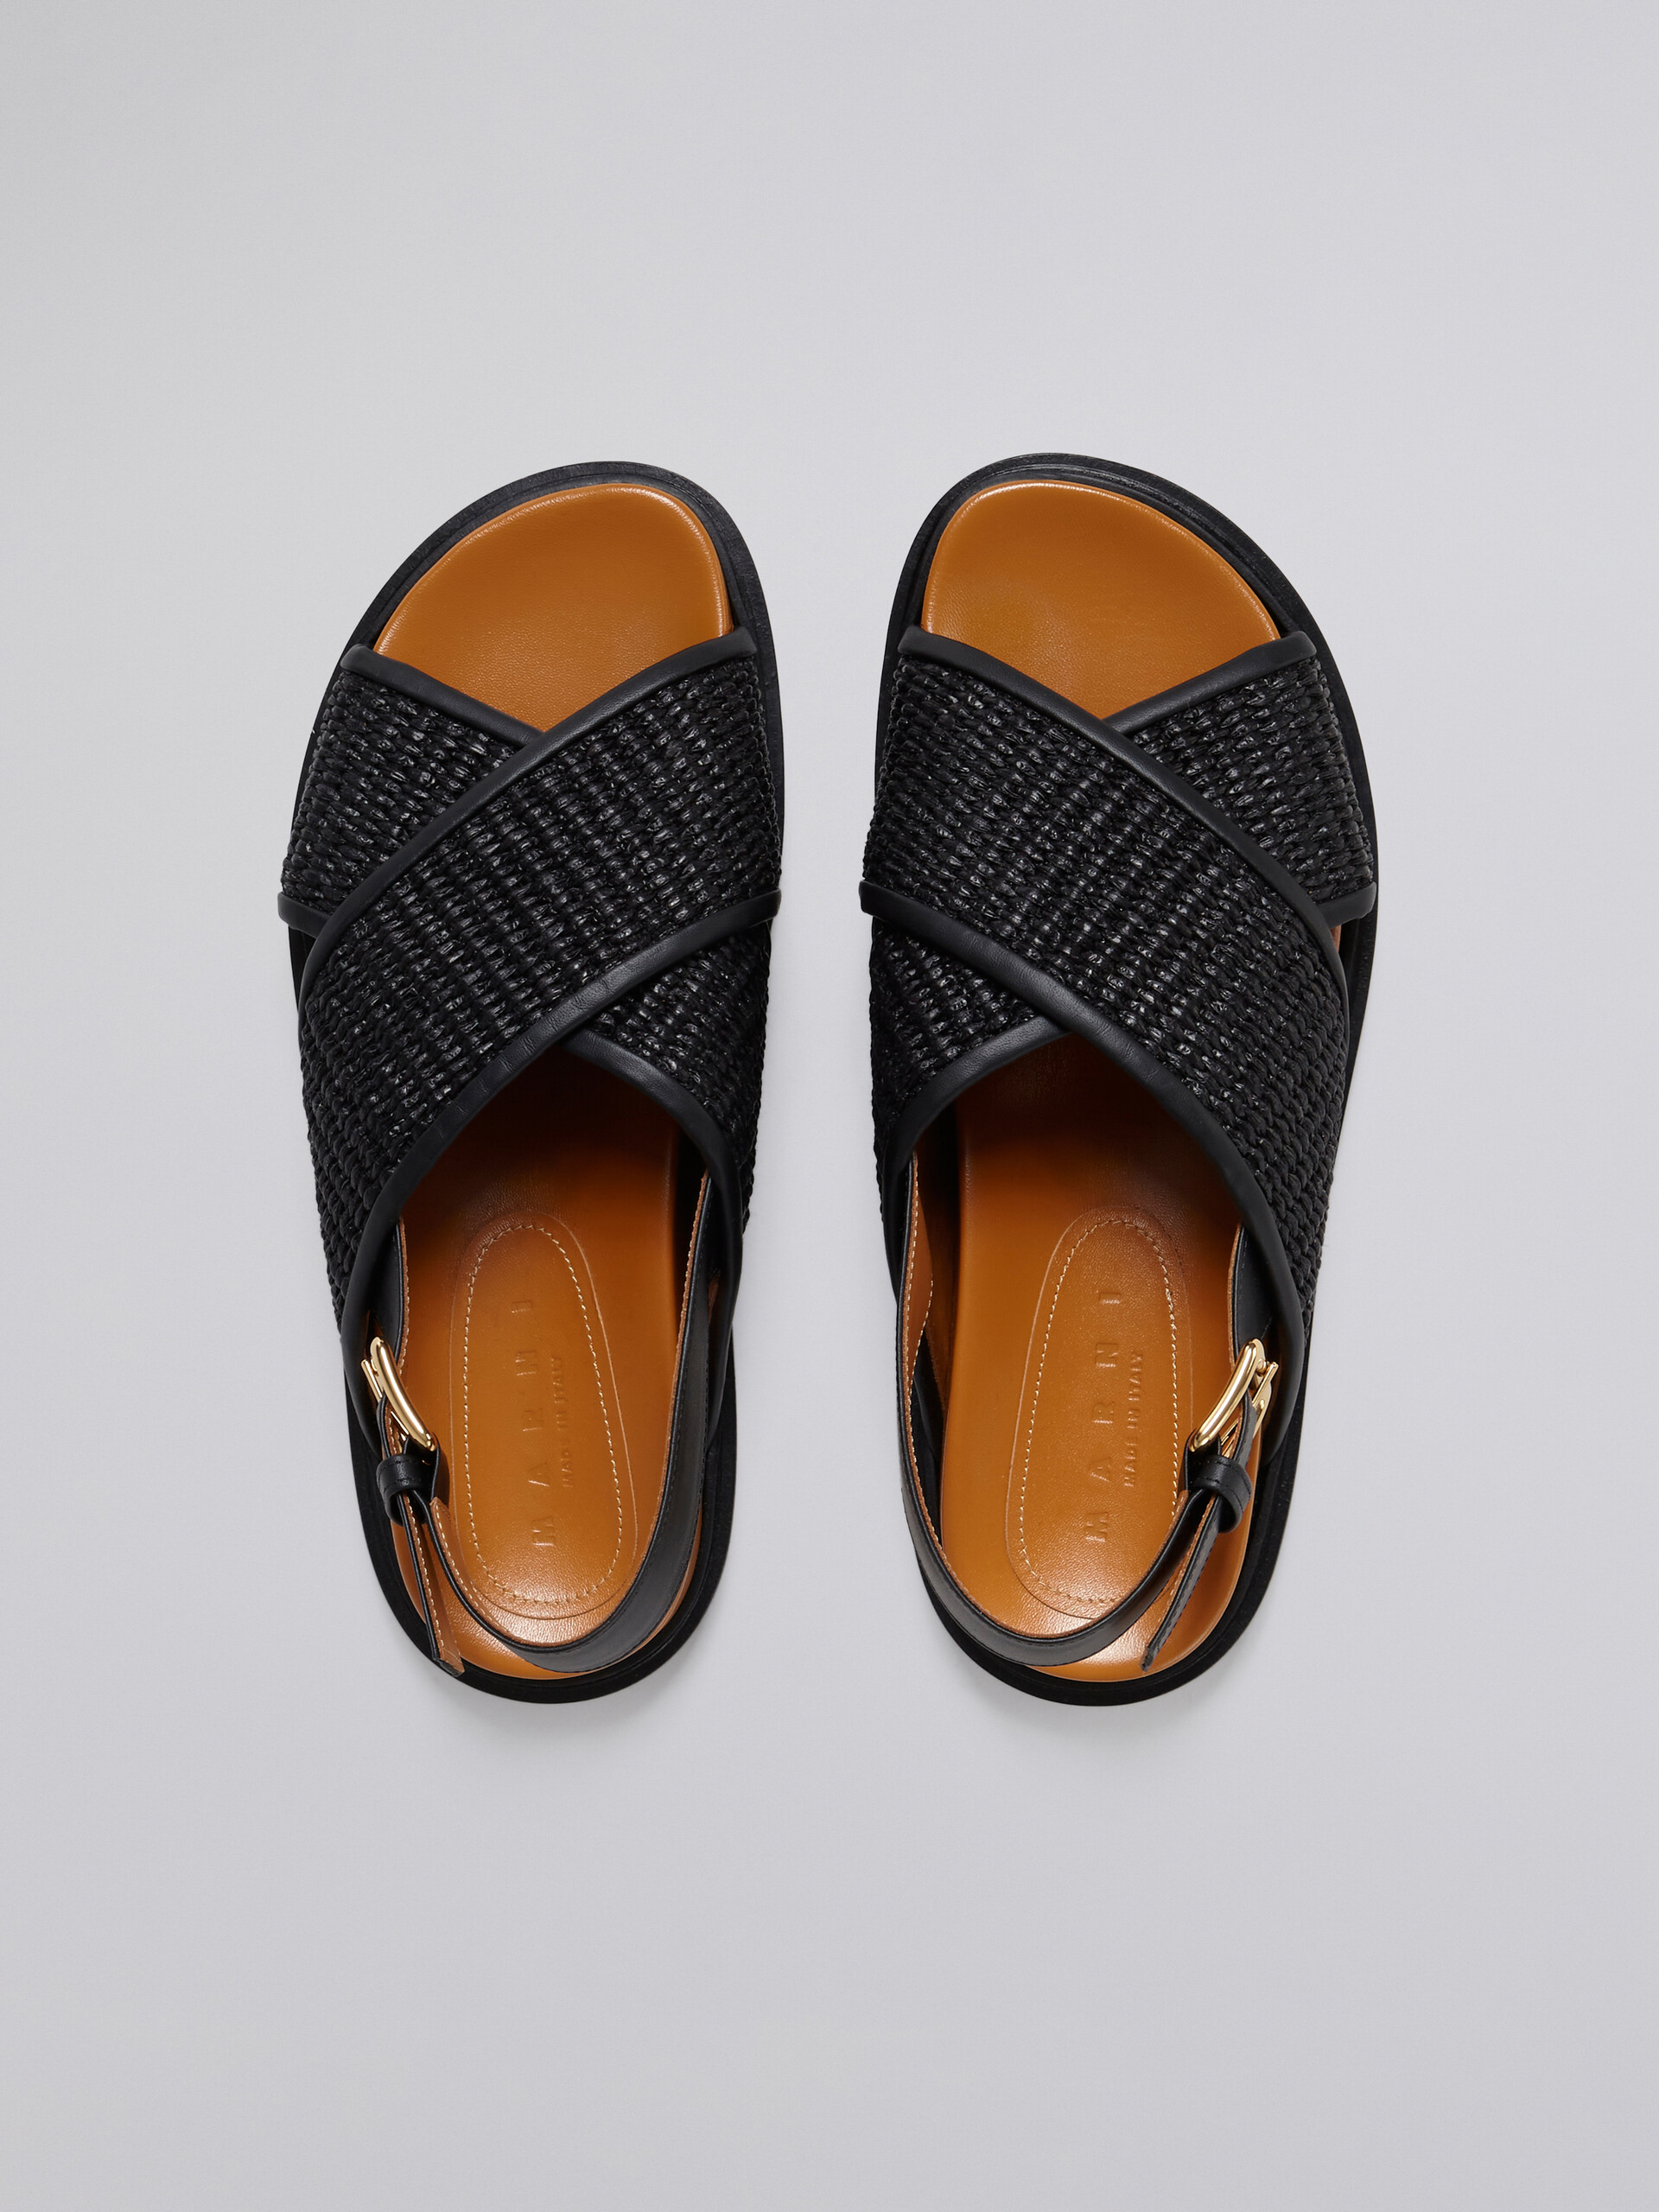 Black raffia and leather fussbett - Sandals - Image 4